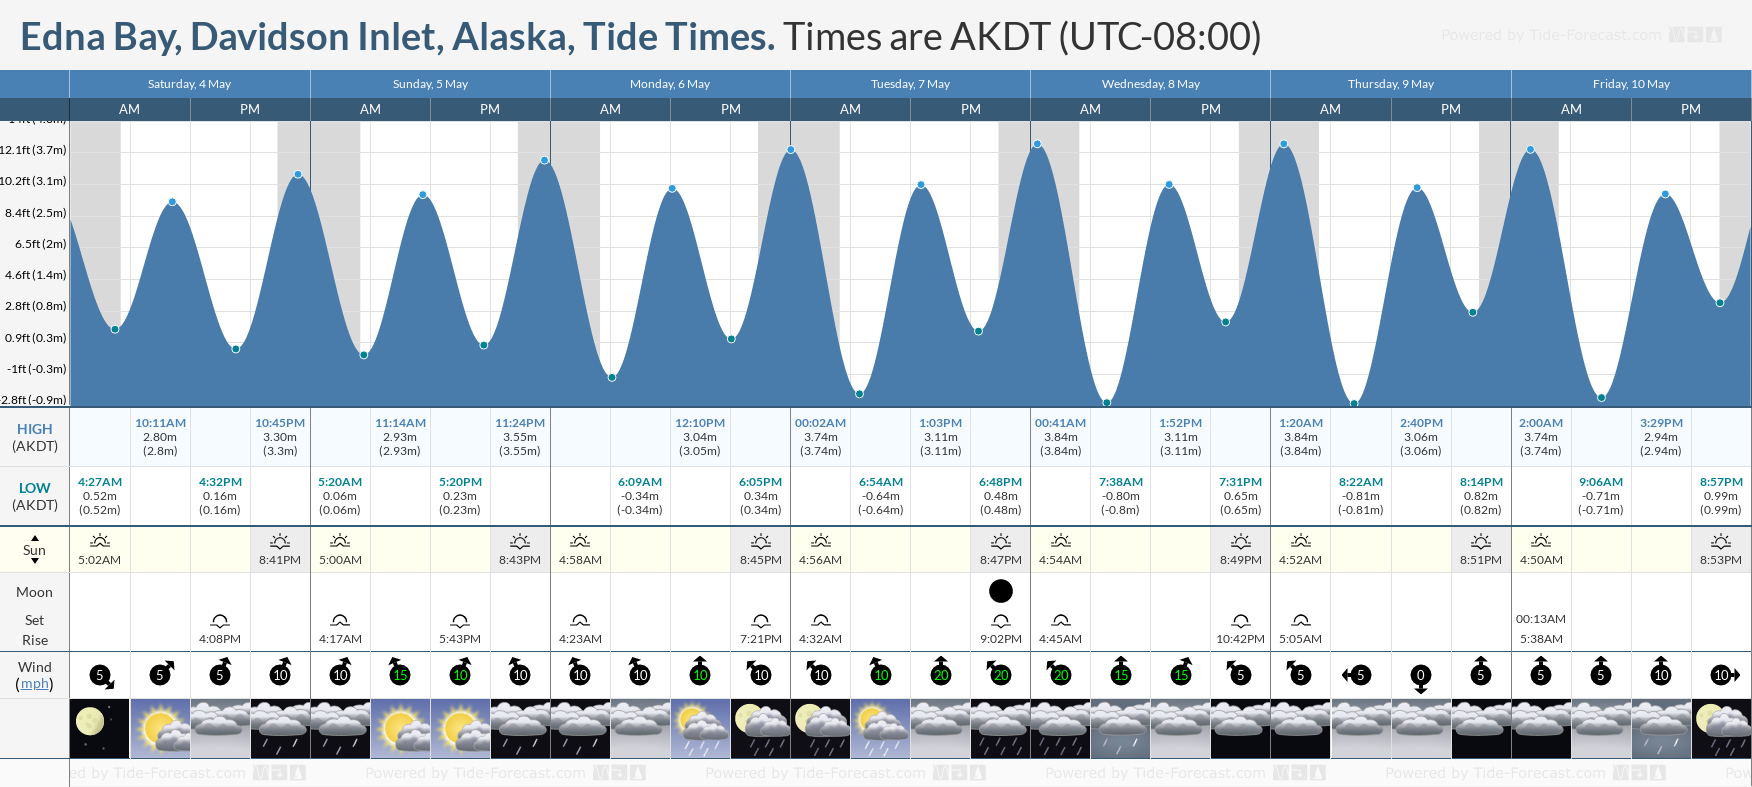 Edna Bay, Davidson Inlet, Alaska Tide Chart including high and low tide tide times for the next 7 days